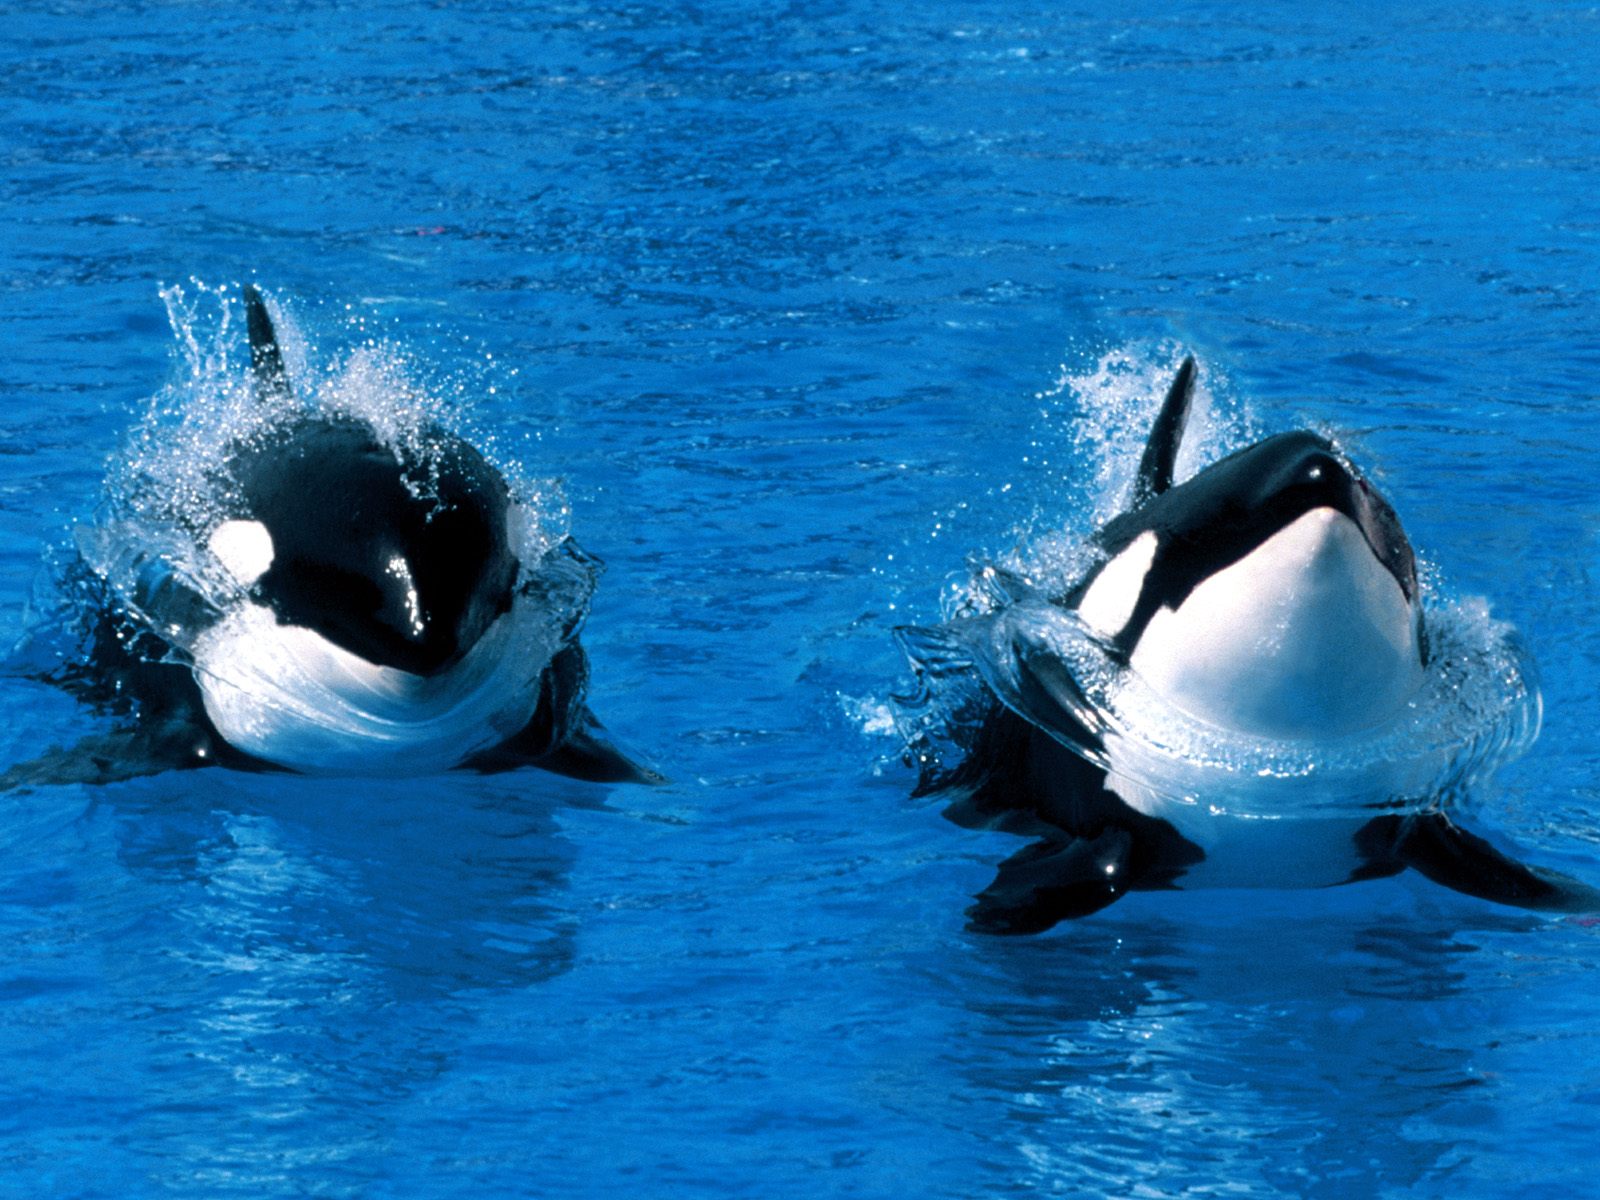 Read More Killer Whale Info